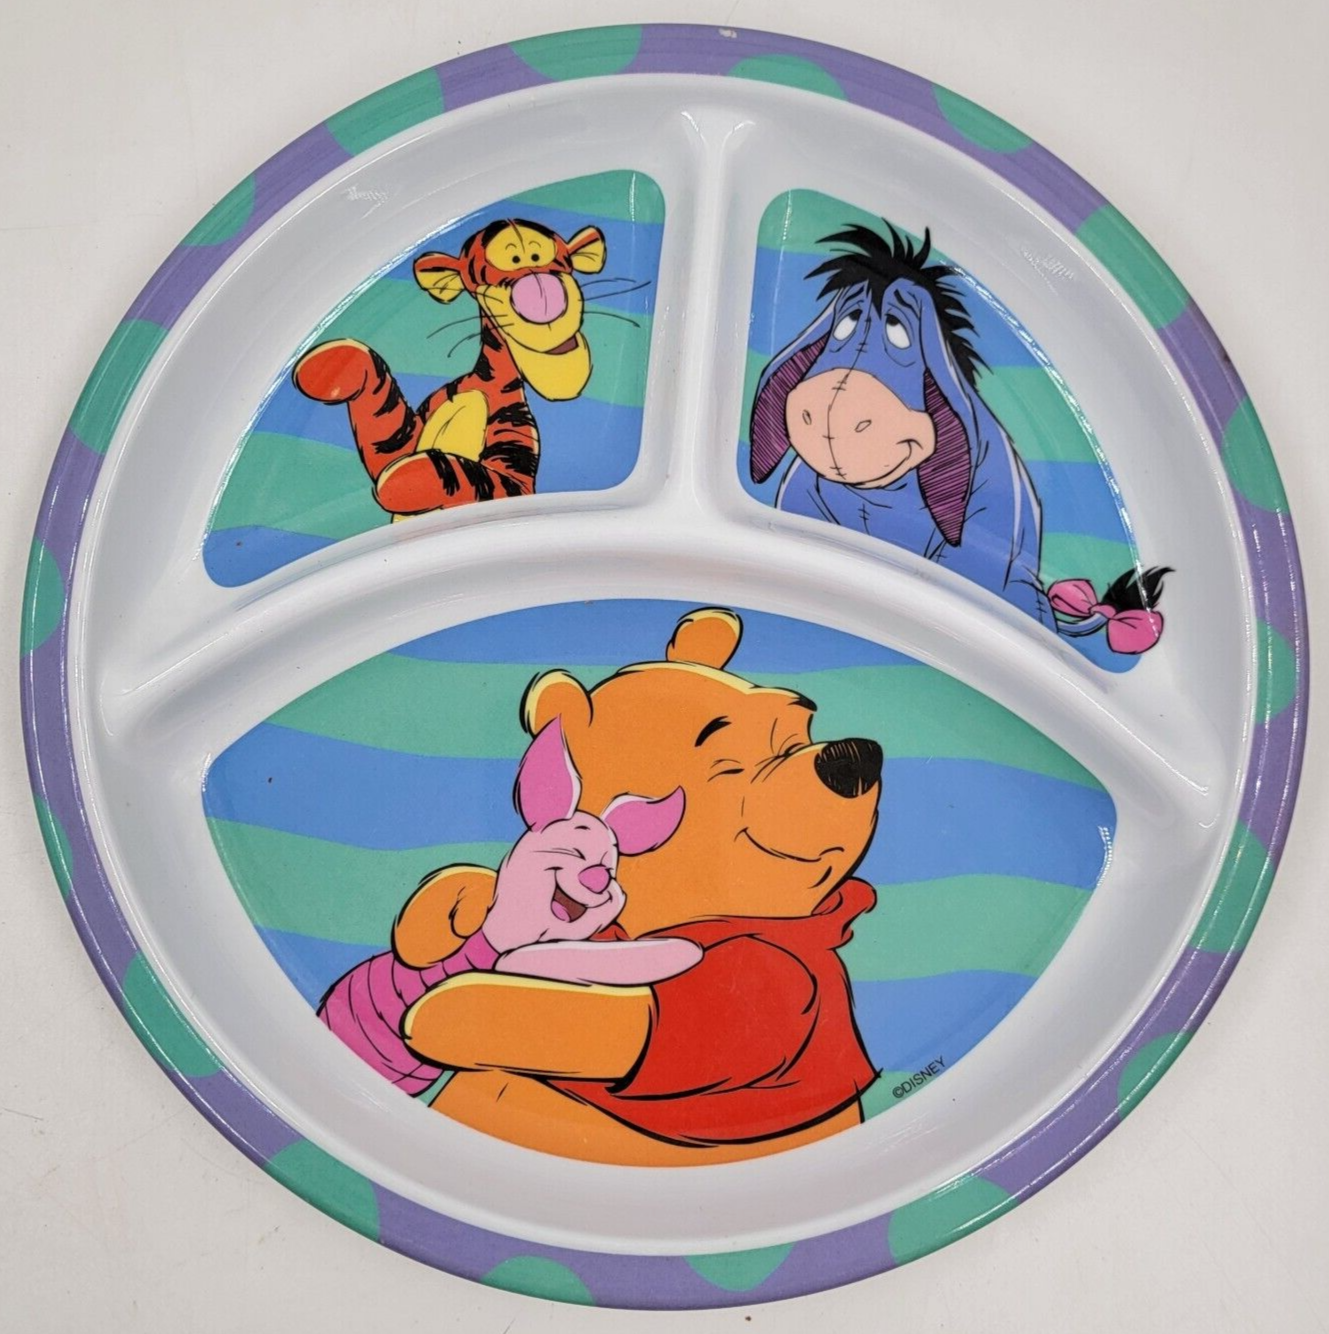  Disney Winnie The Pooh Plate Melamine Divided Childs Baby 1990's Zak Designs - $12.00